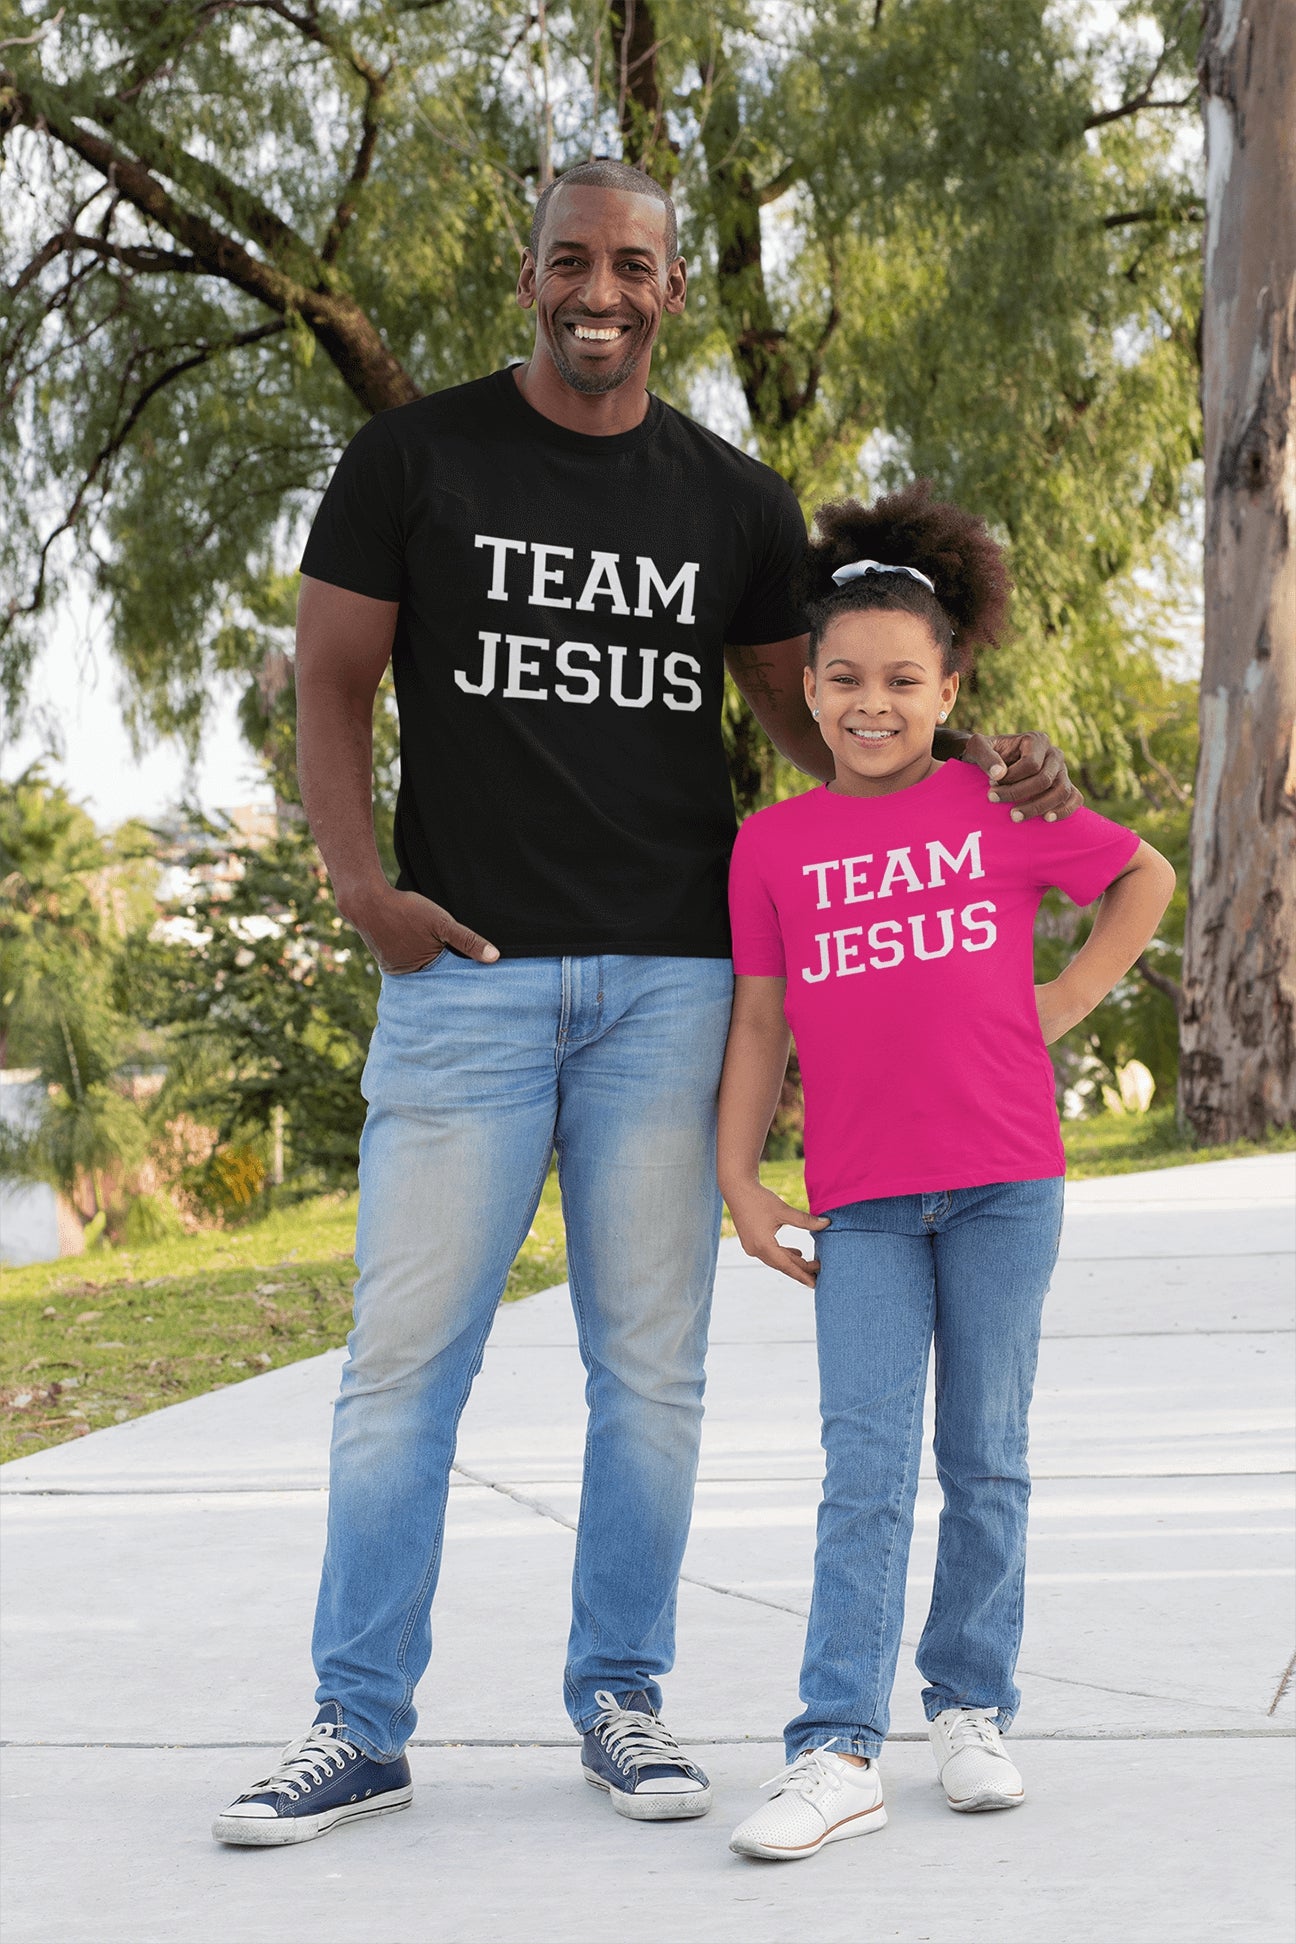 TEAM JESUS on Kids T-Shirt (#589-201)